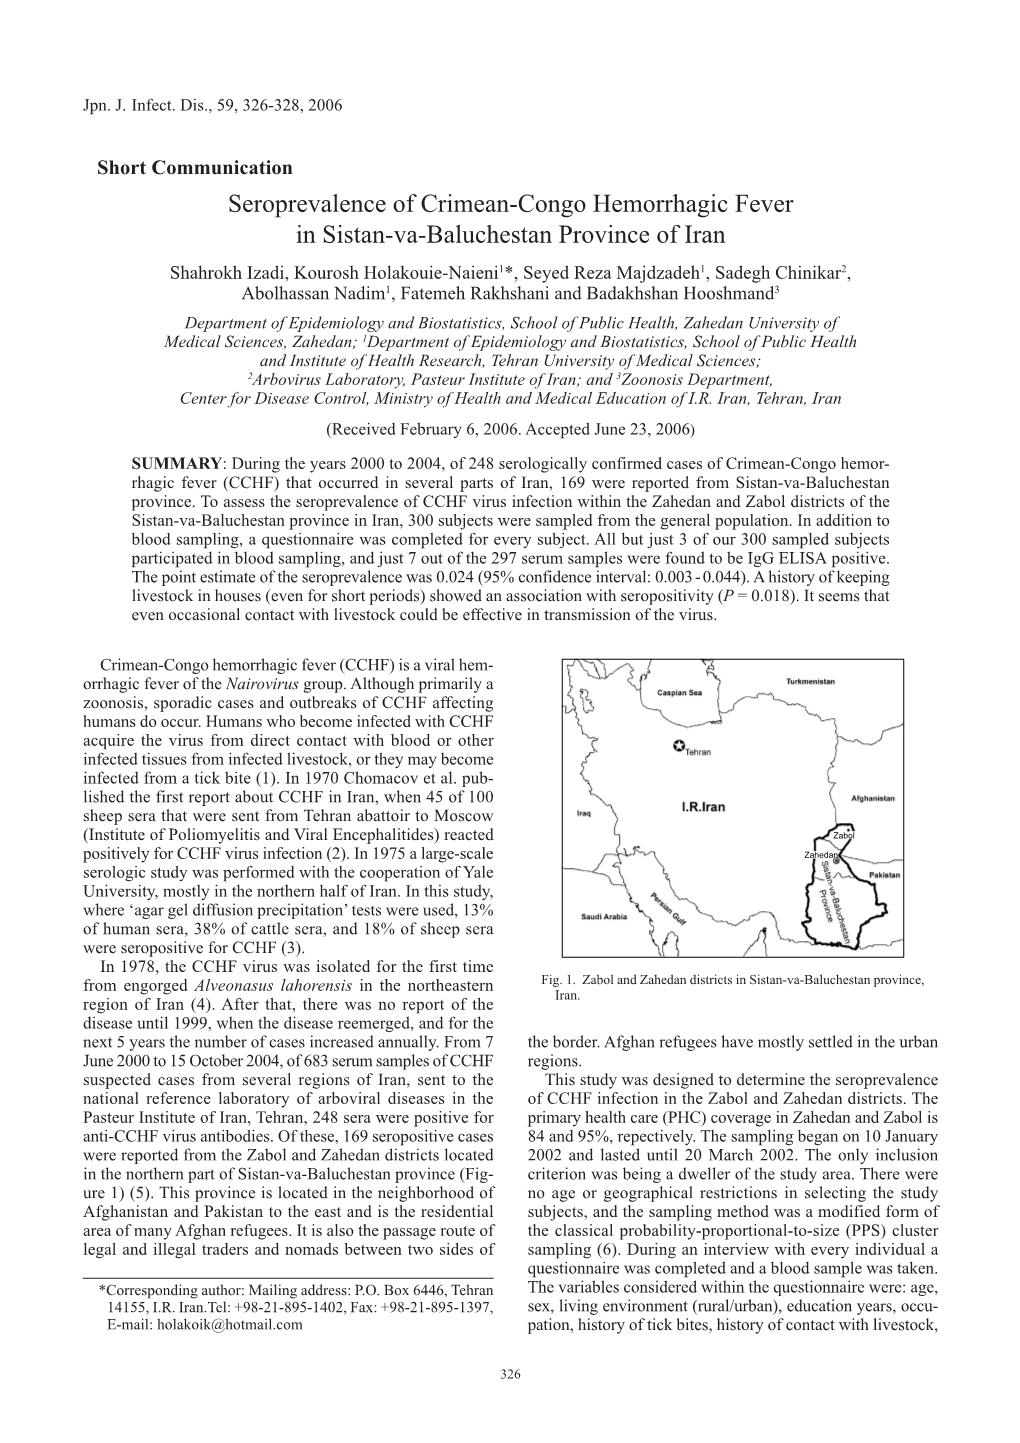 Seroprevalence of Crimean-Congo Hemorrhagic Fever in Sistan-Va